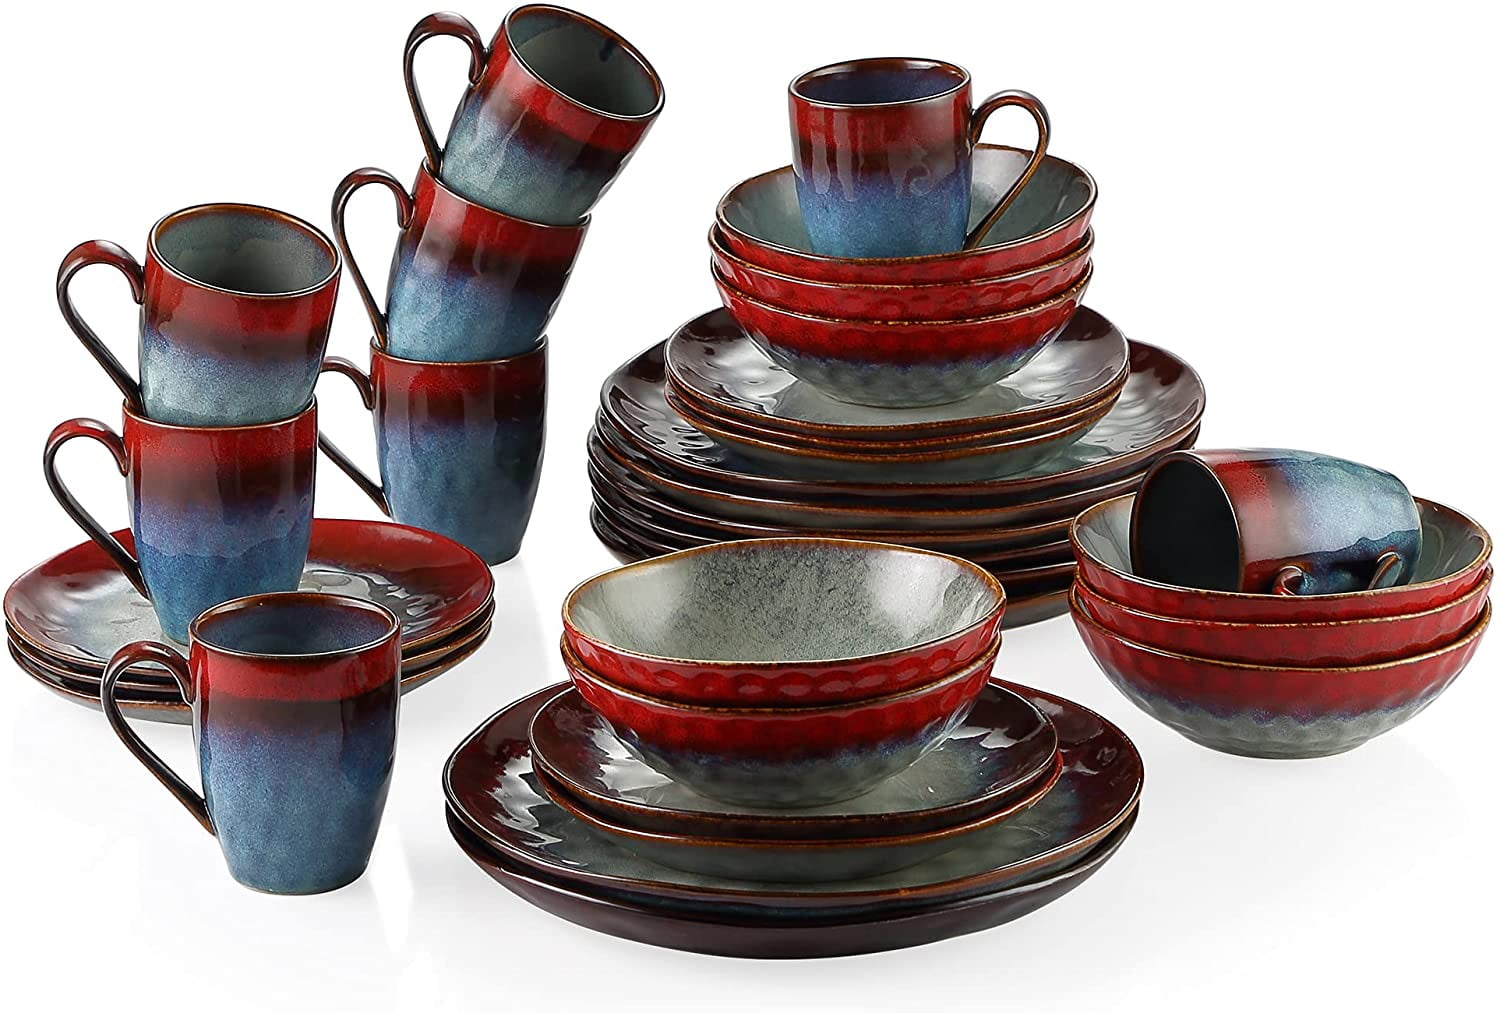 vancasso Starry 23-Piece Dinnerware Set Glazed Stoneware Dinner Plate Bowl Dish 